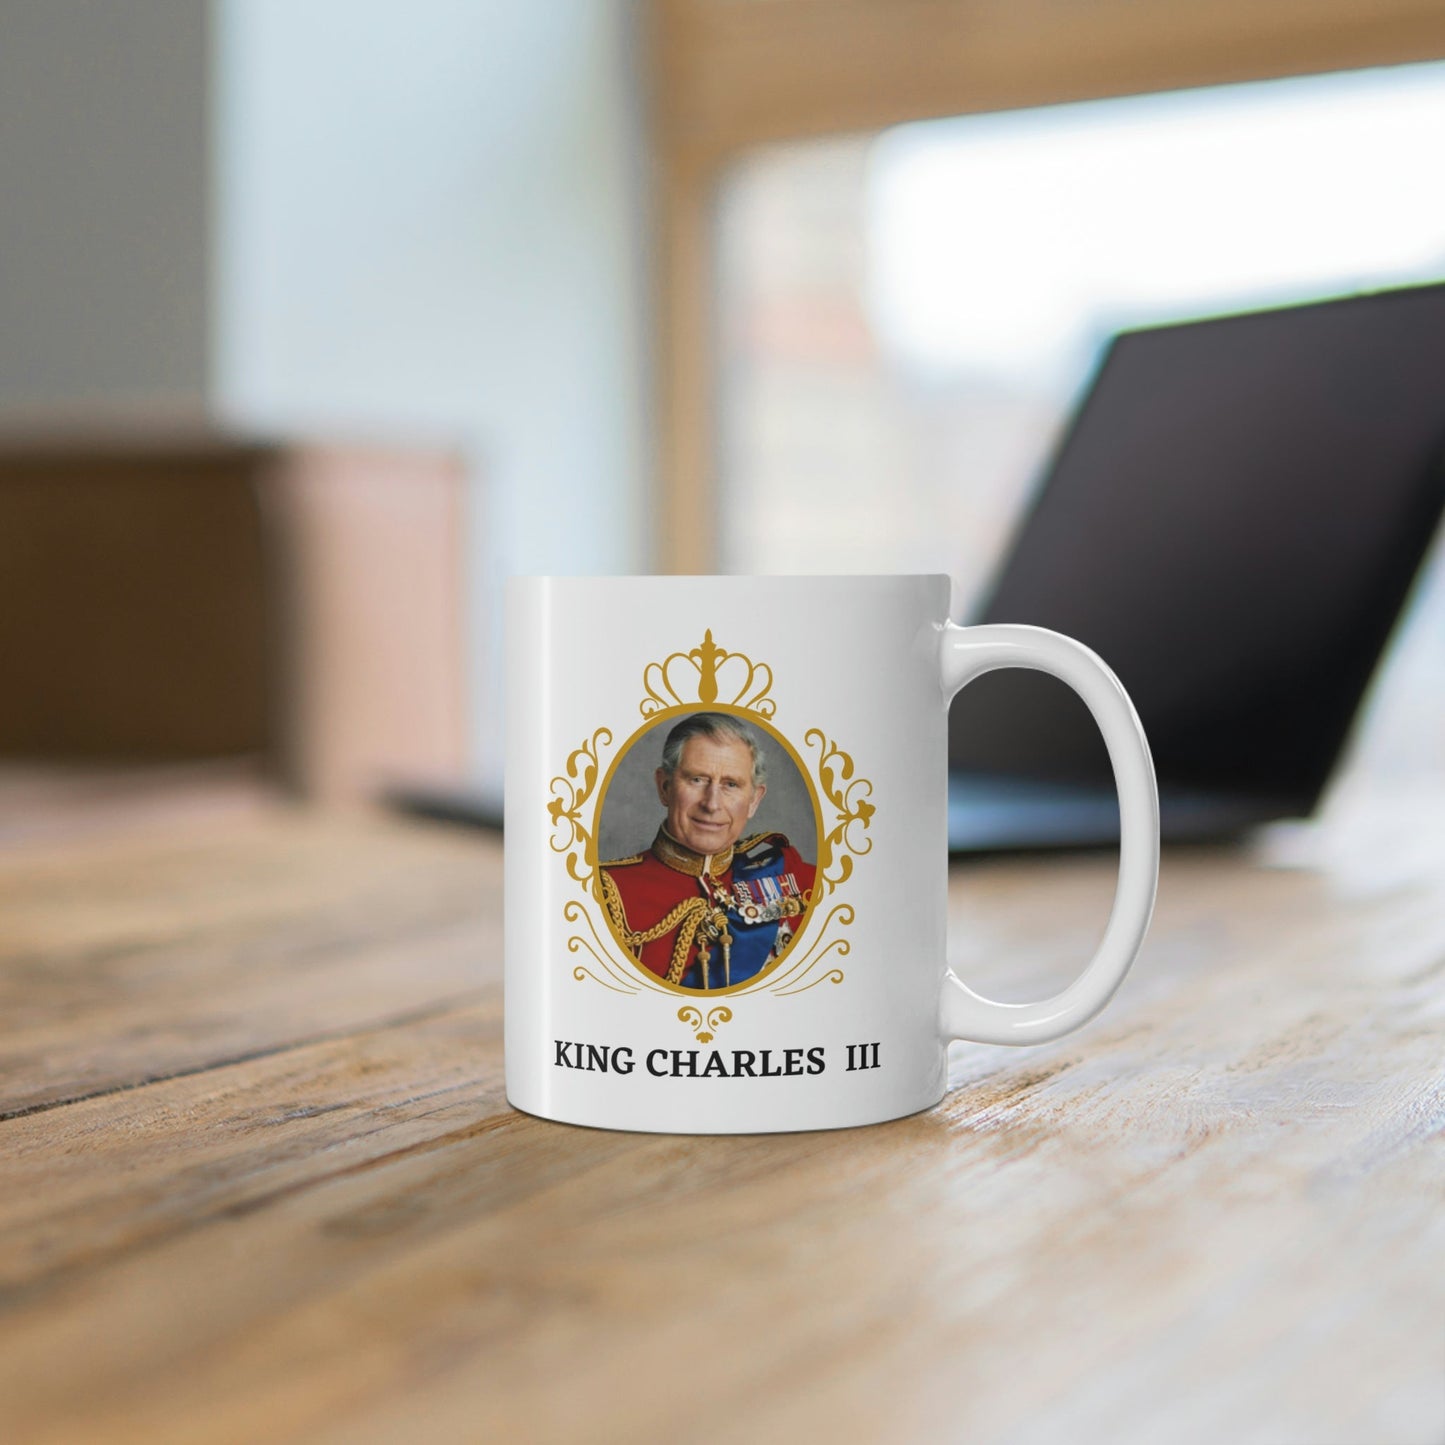 HM King Charles III (6 May 2023) Commemorative Coronation Mug